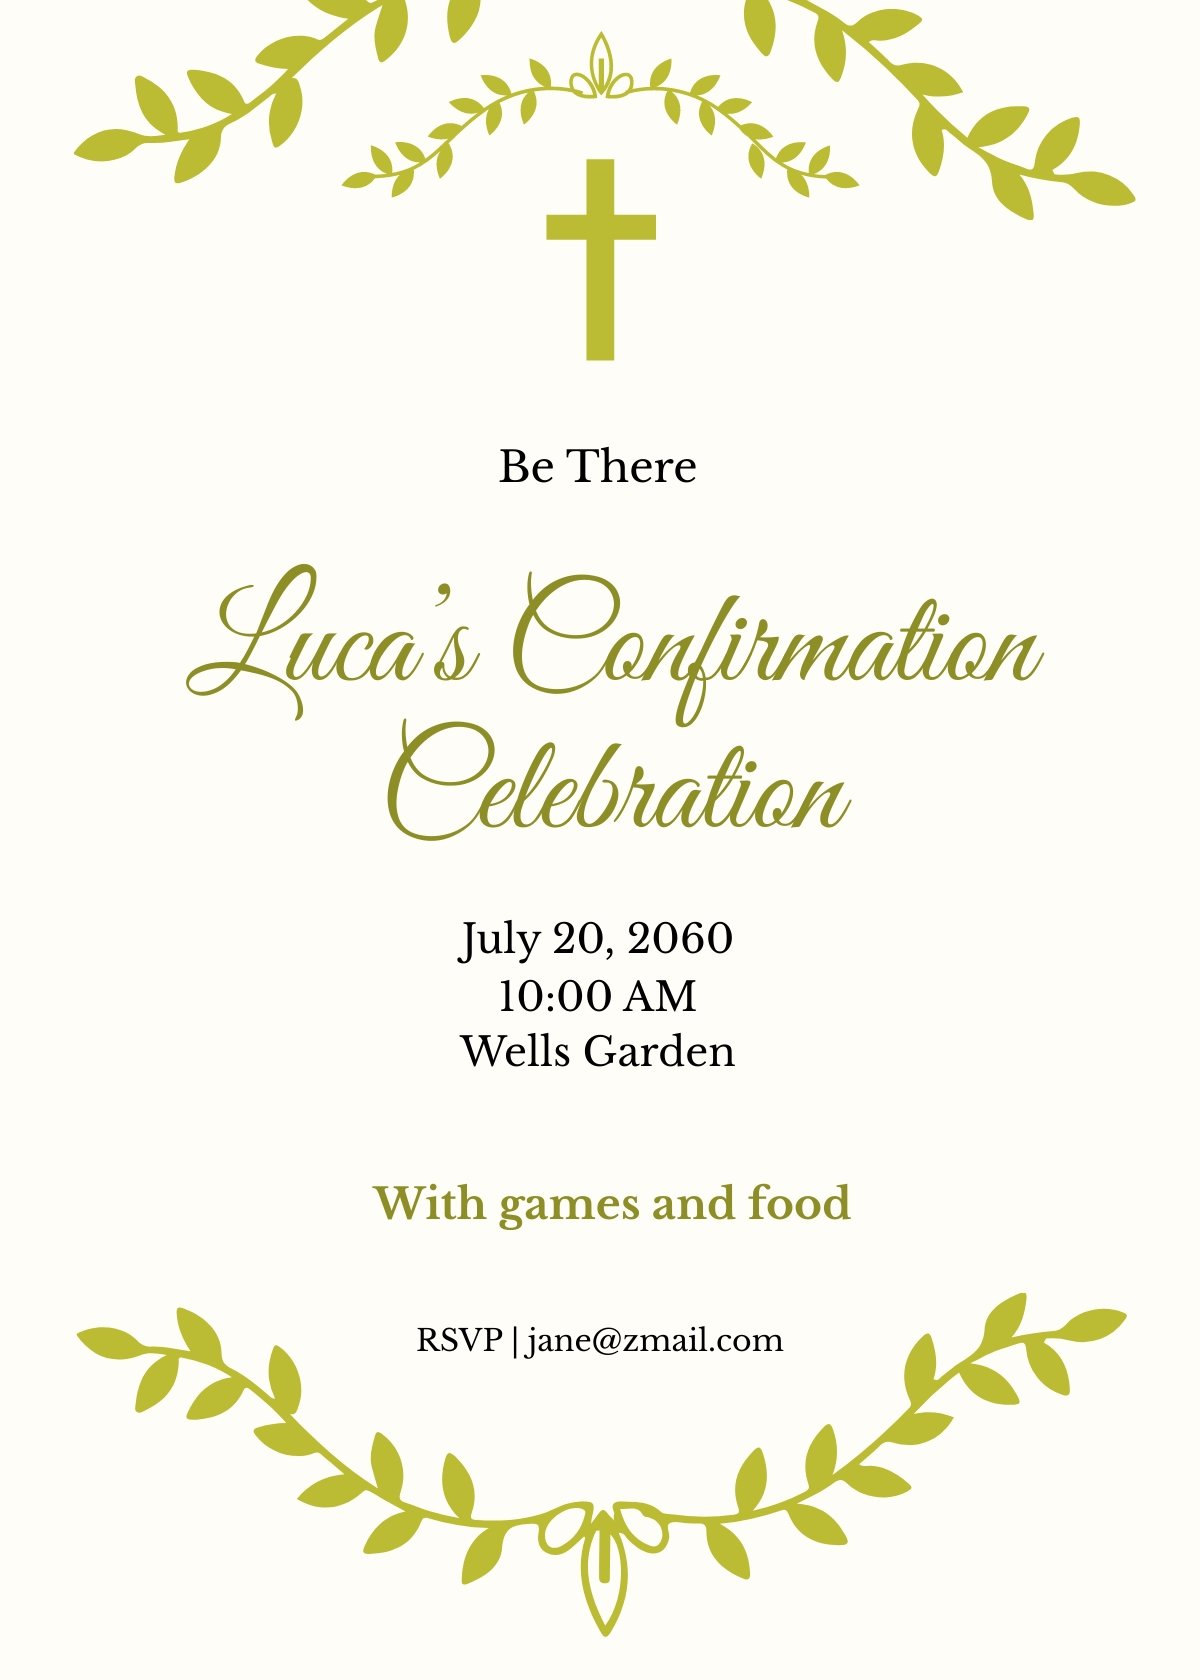 Confirmation Celebration Invitation